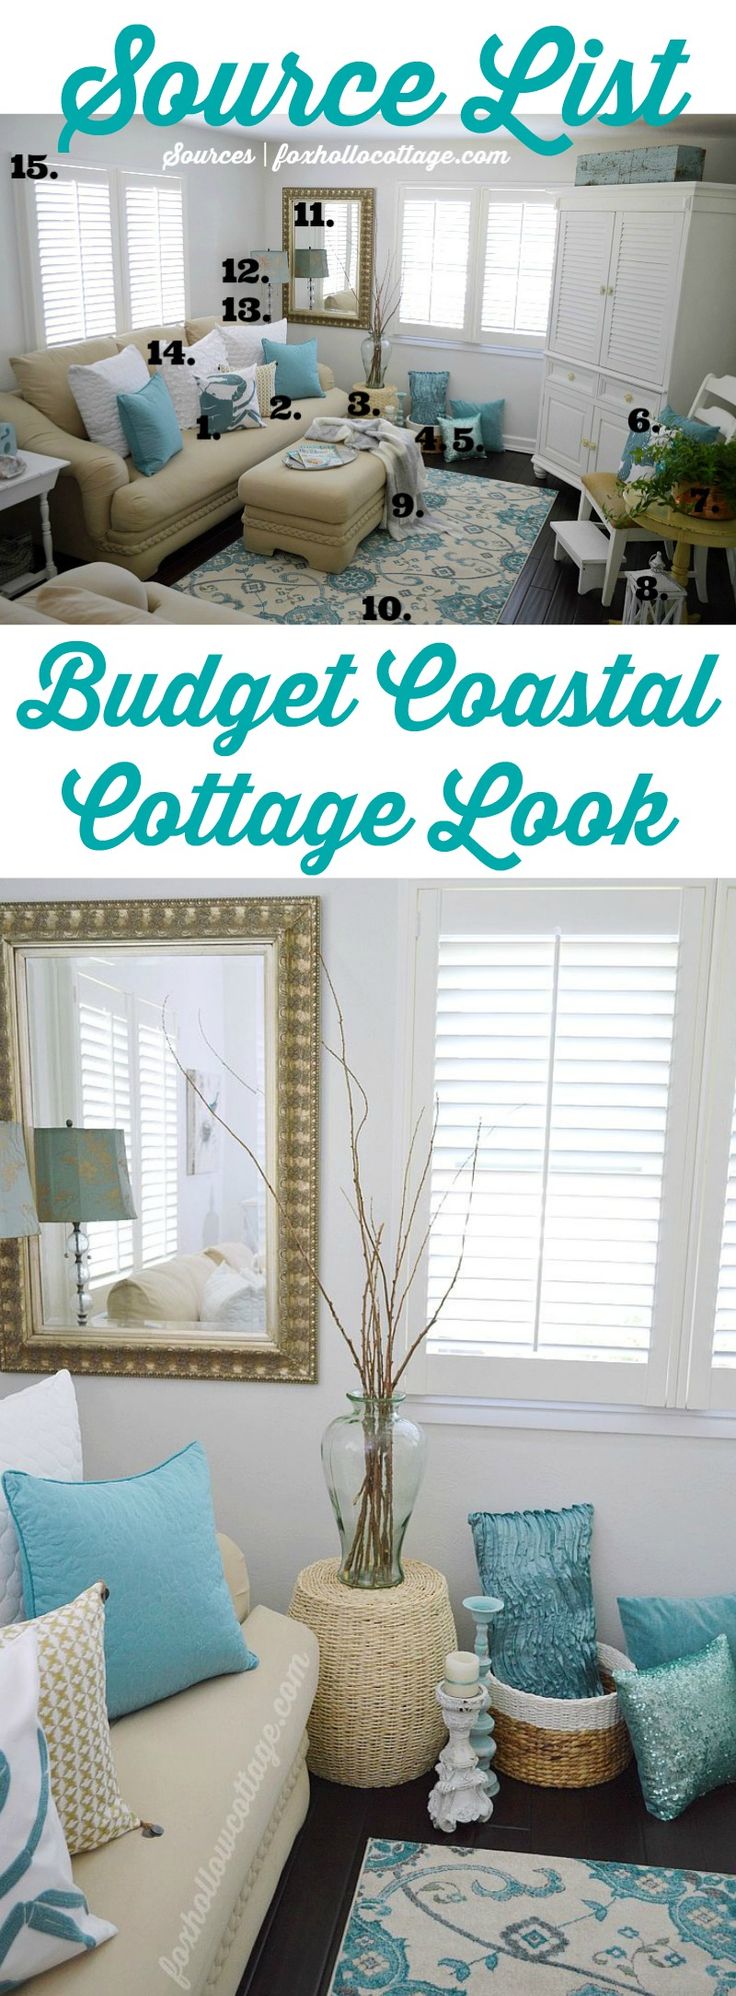 Budget Coastal Cottage Decor Shopping Source List | Fox Hollow Cottage #homegood...